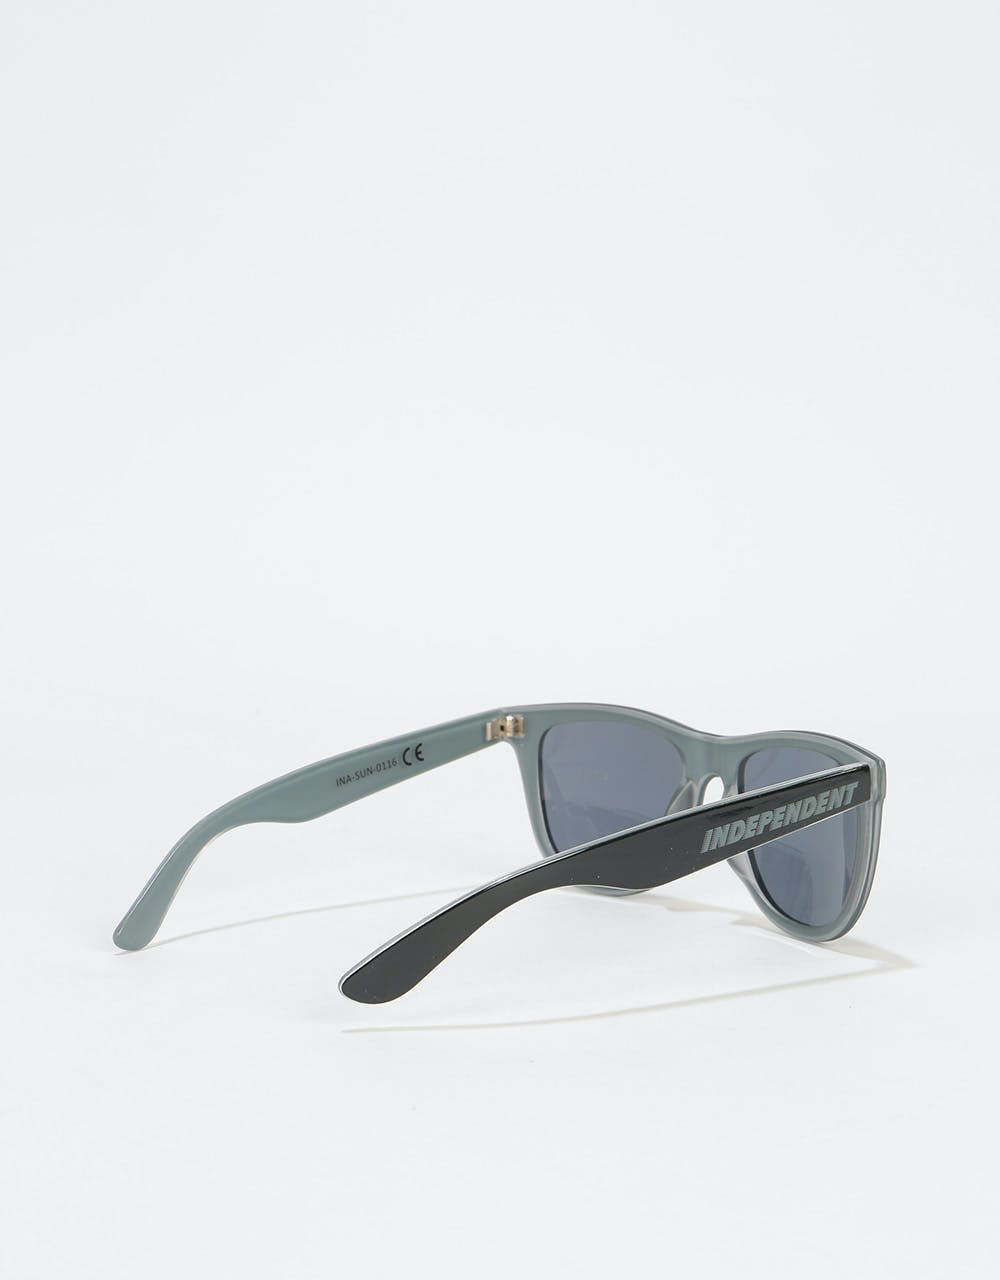 Independent Blaze Sunglasses - Grey